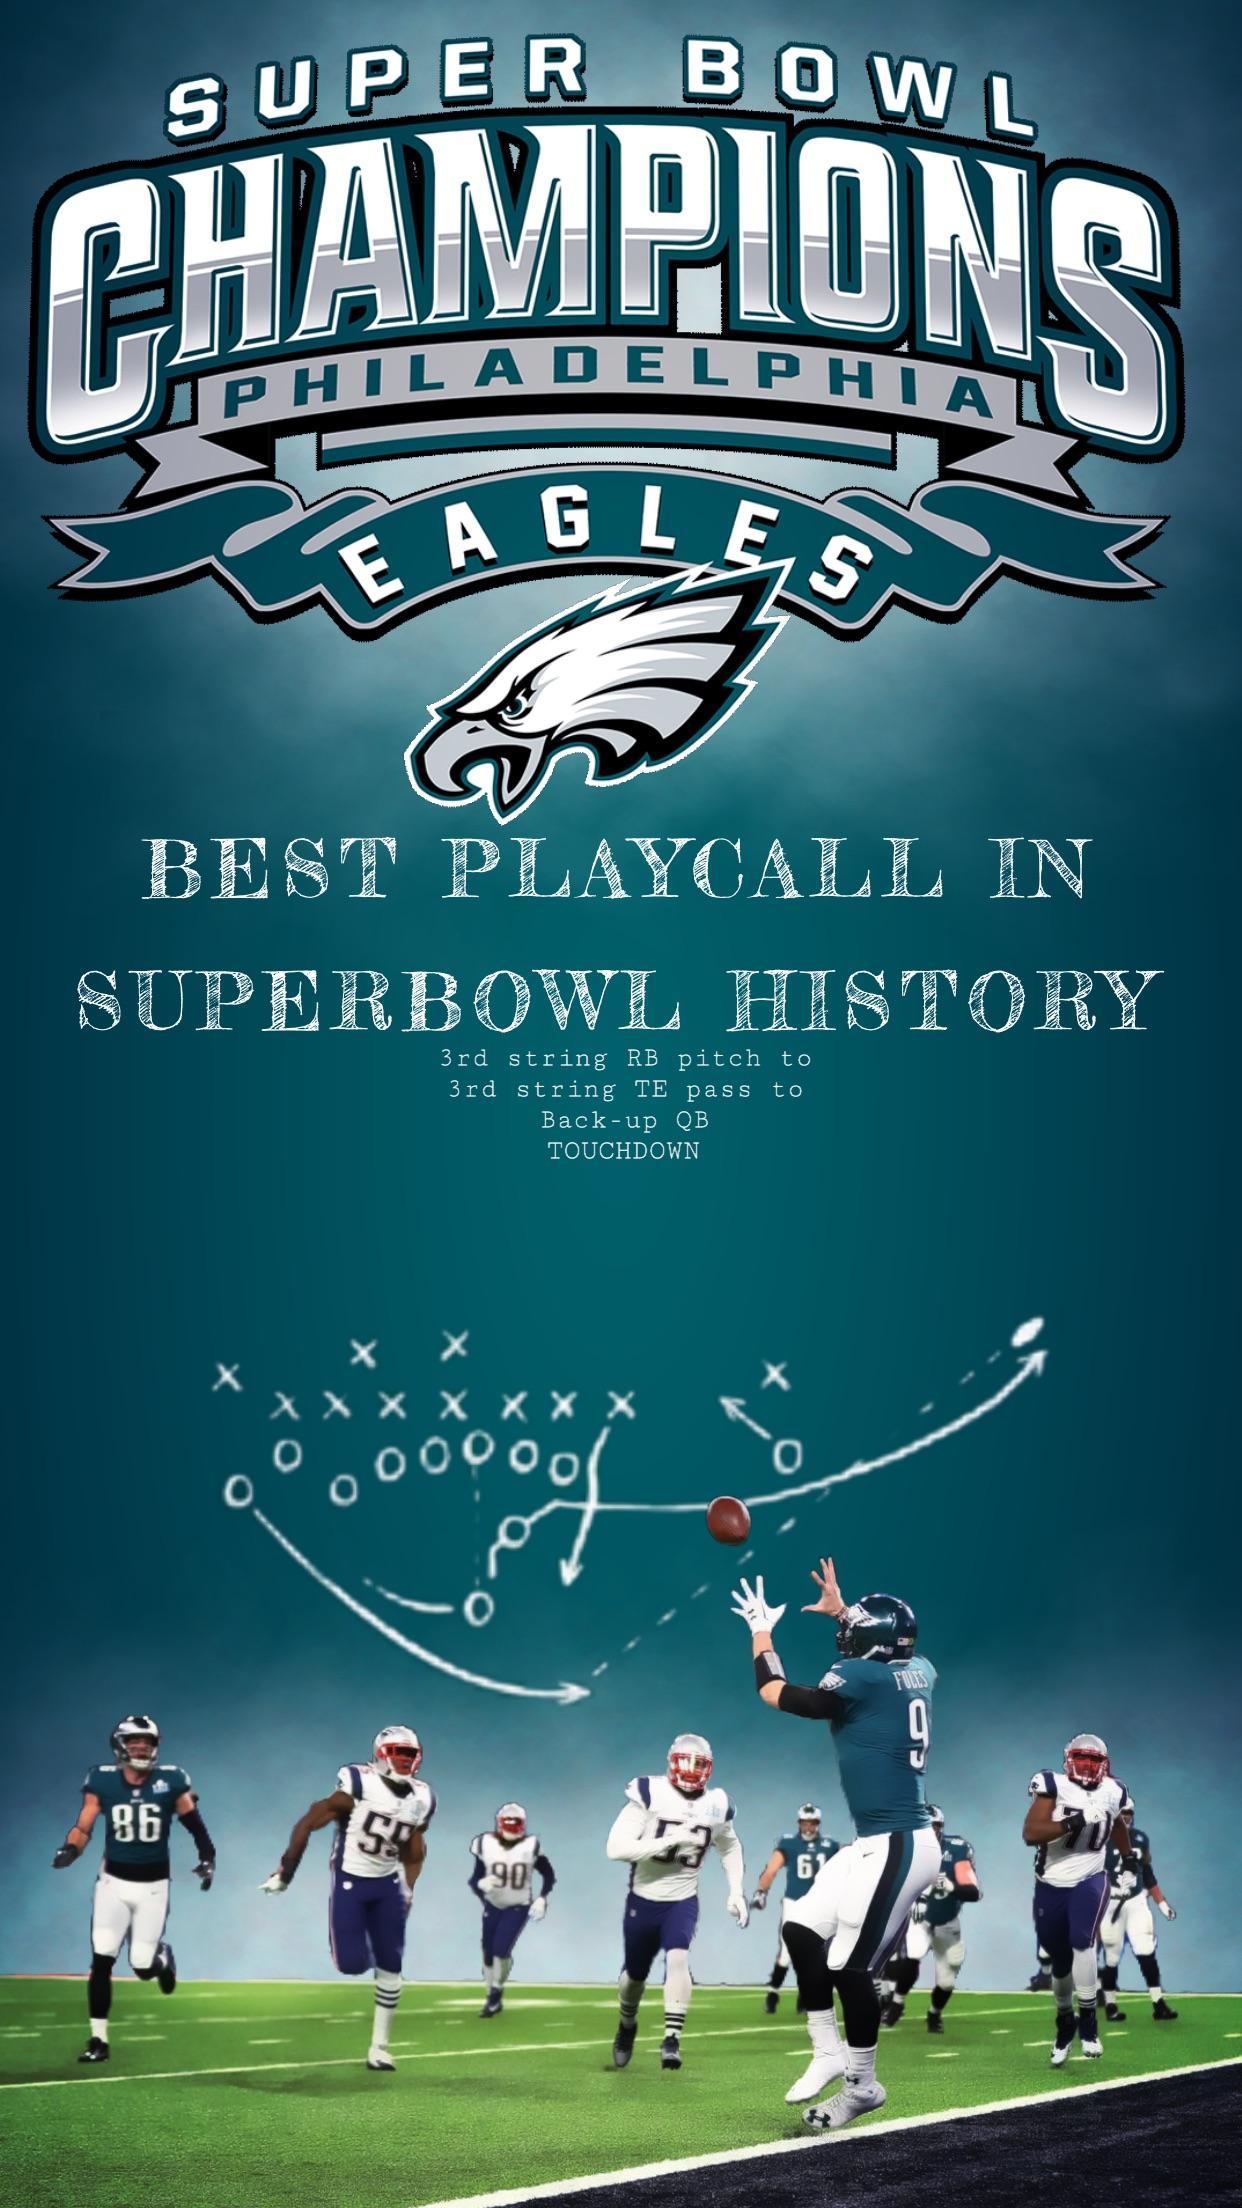 Foles Super Bowl MVP iPhone wallpaper?